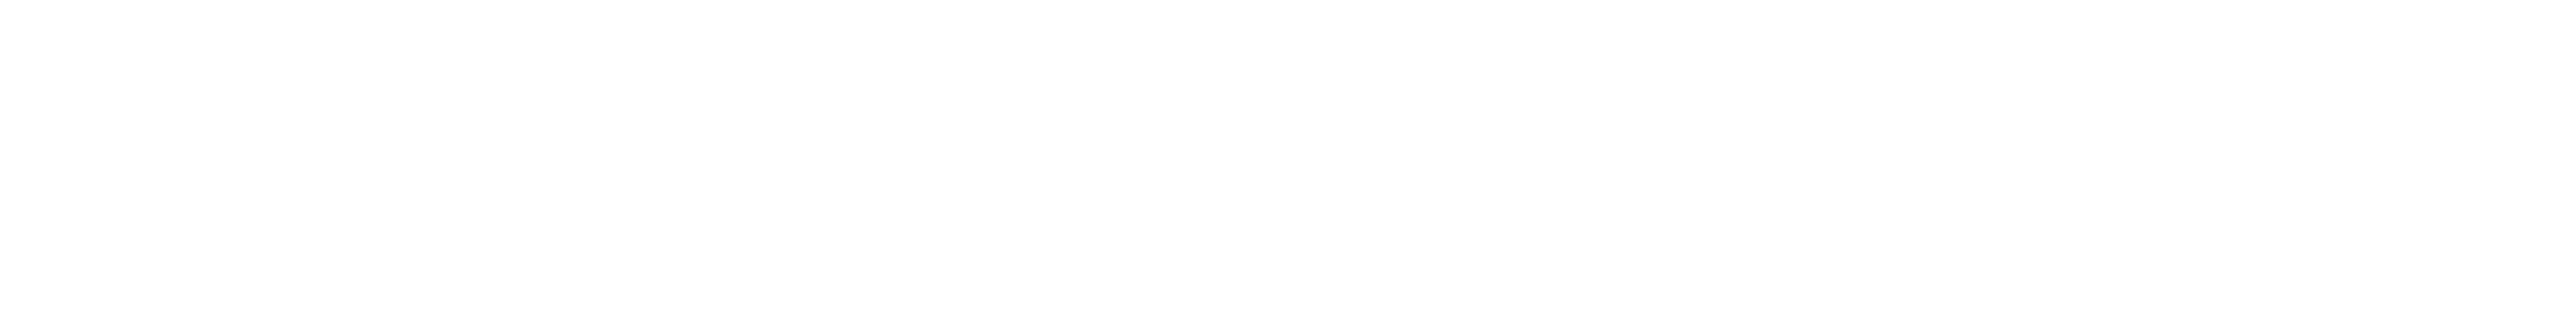 Collie Hub logo strip-01